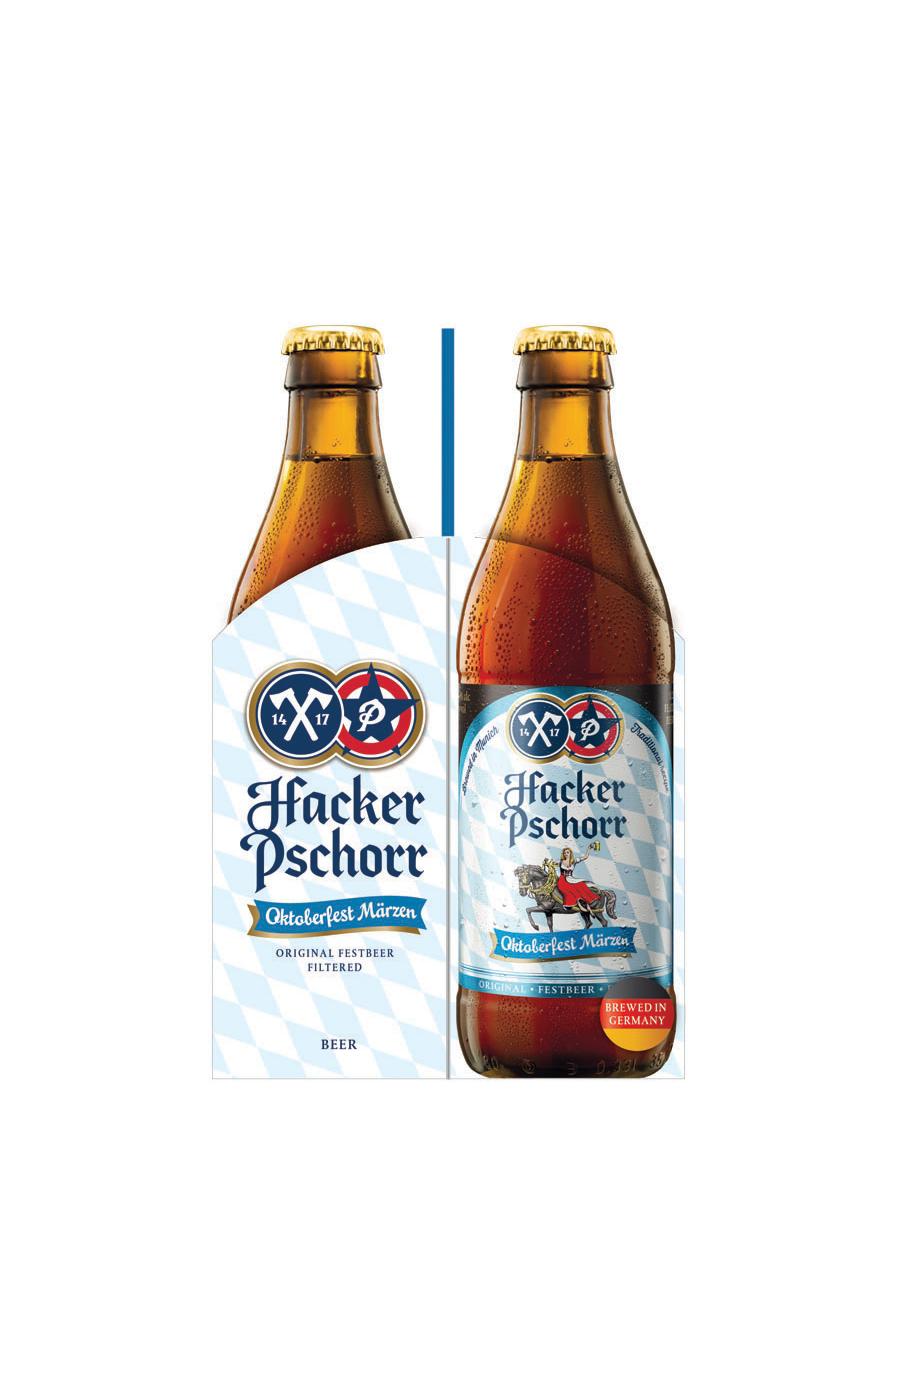 Hacker Pschorr Oktoberfest Beer 6 pk Bottles; image 2 of 2